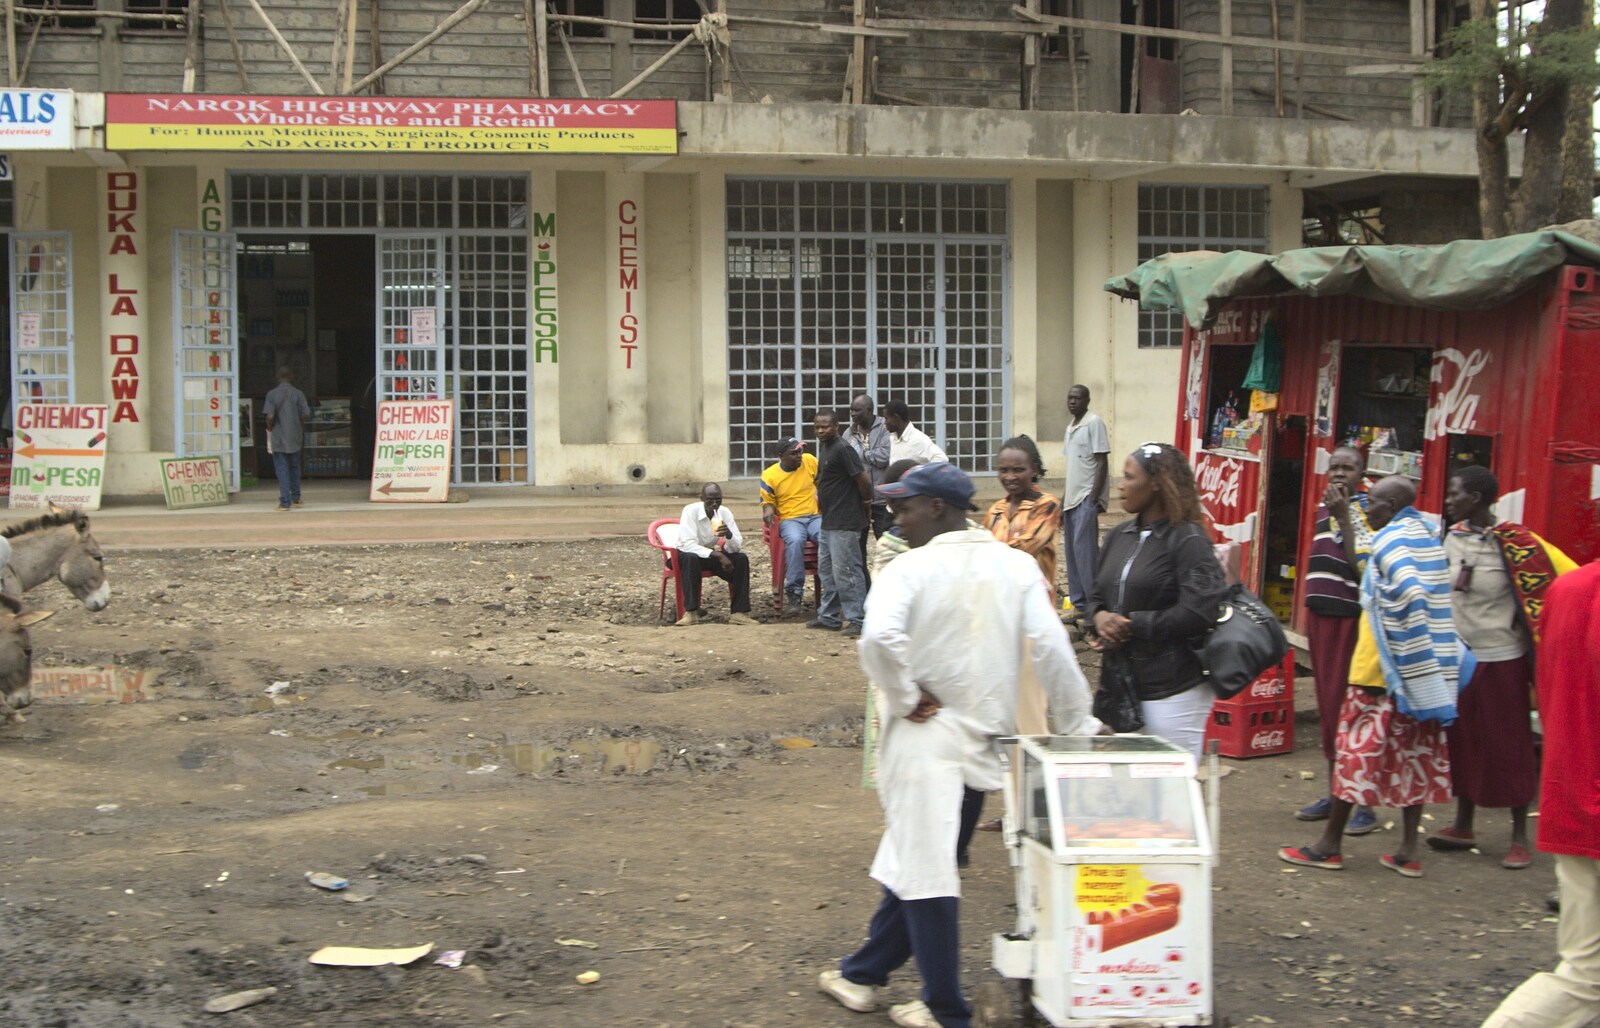 Outside the Narok Highway Pharmacy from Narok to Naivasha and Hell's Gate National Park, Kenya, Africa - 5th November 2010